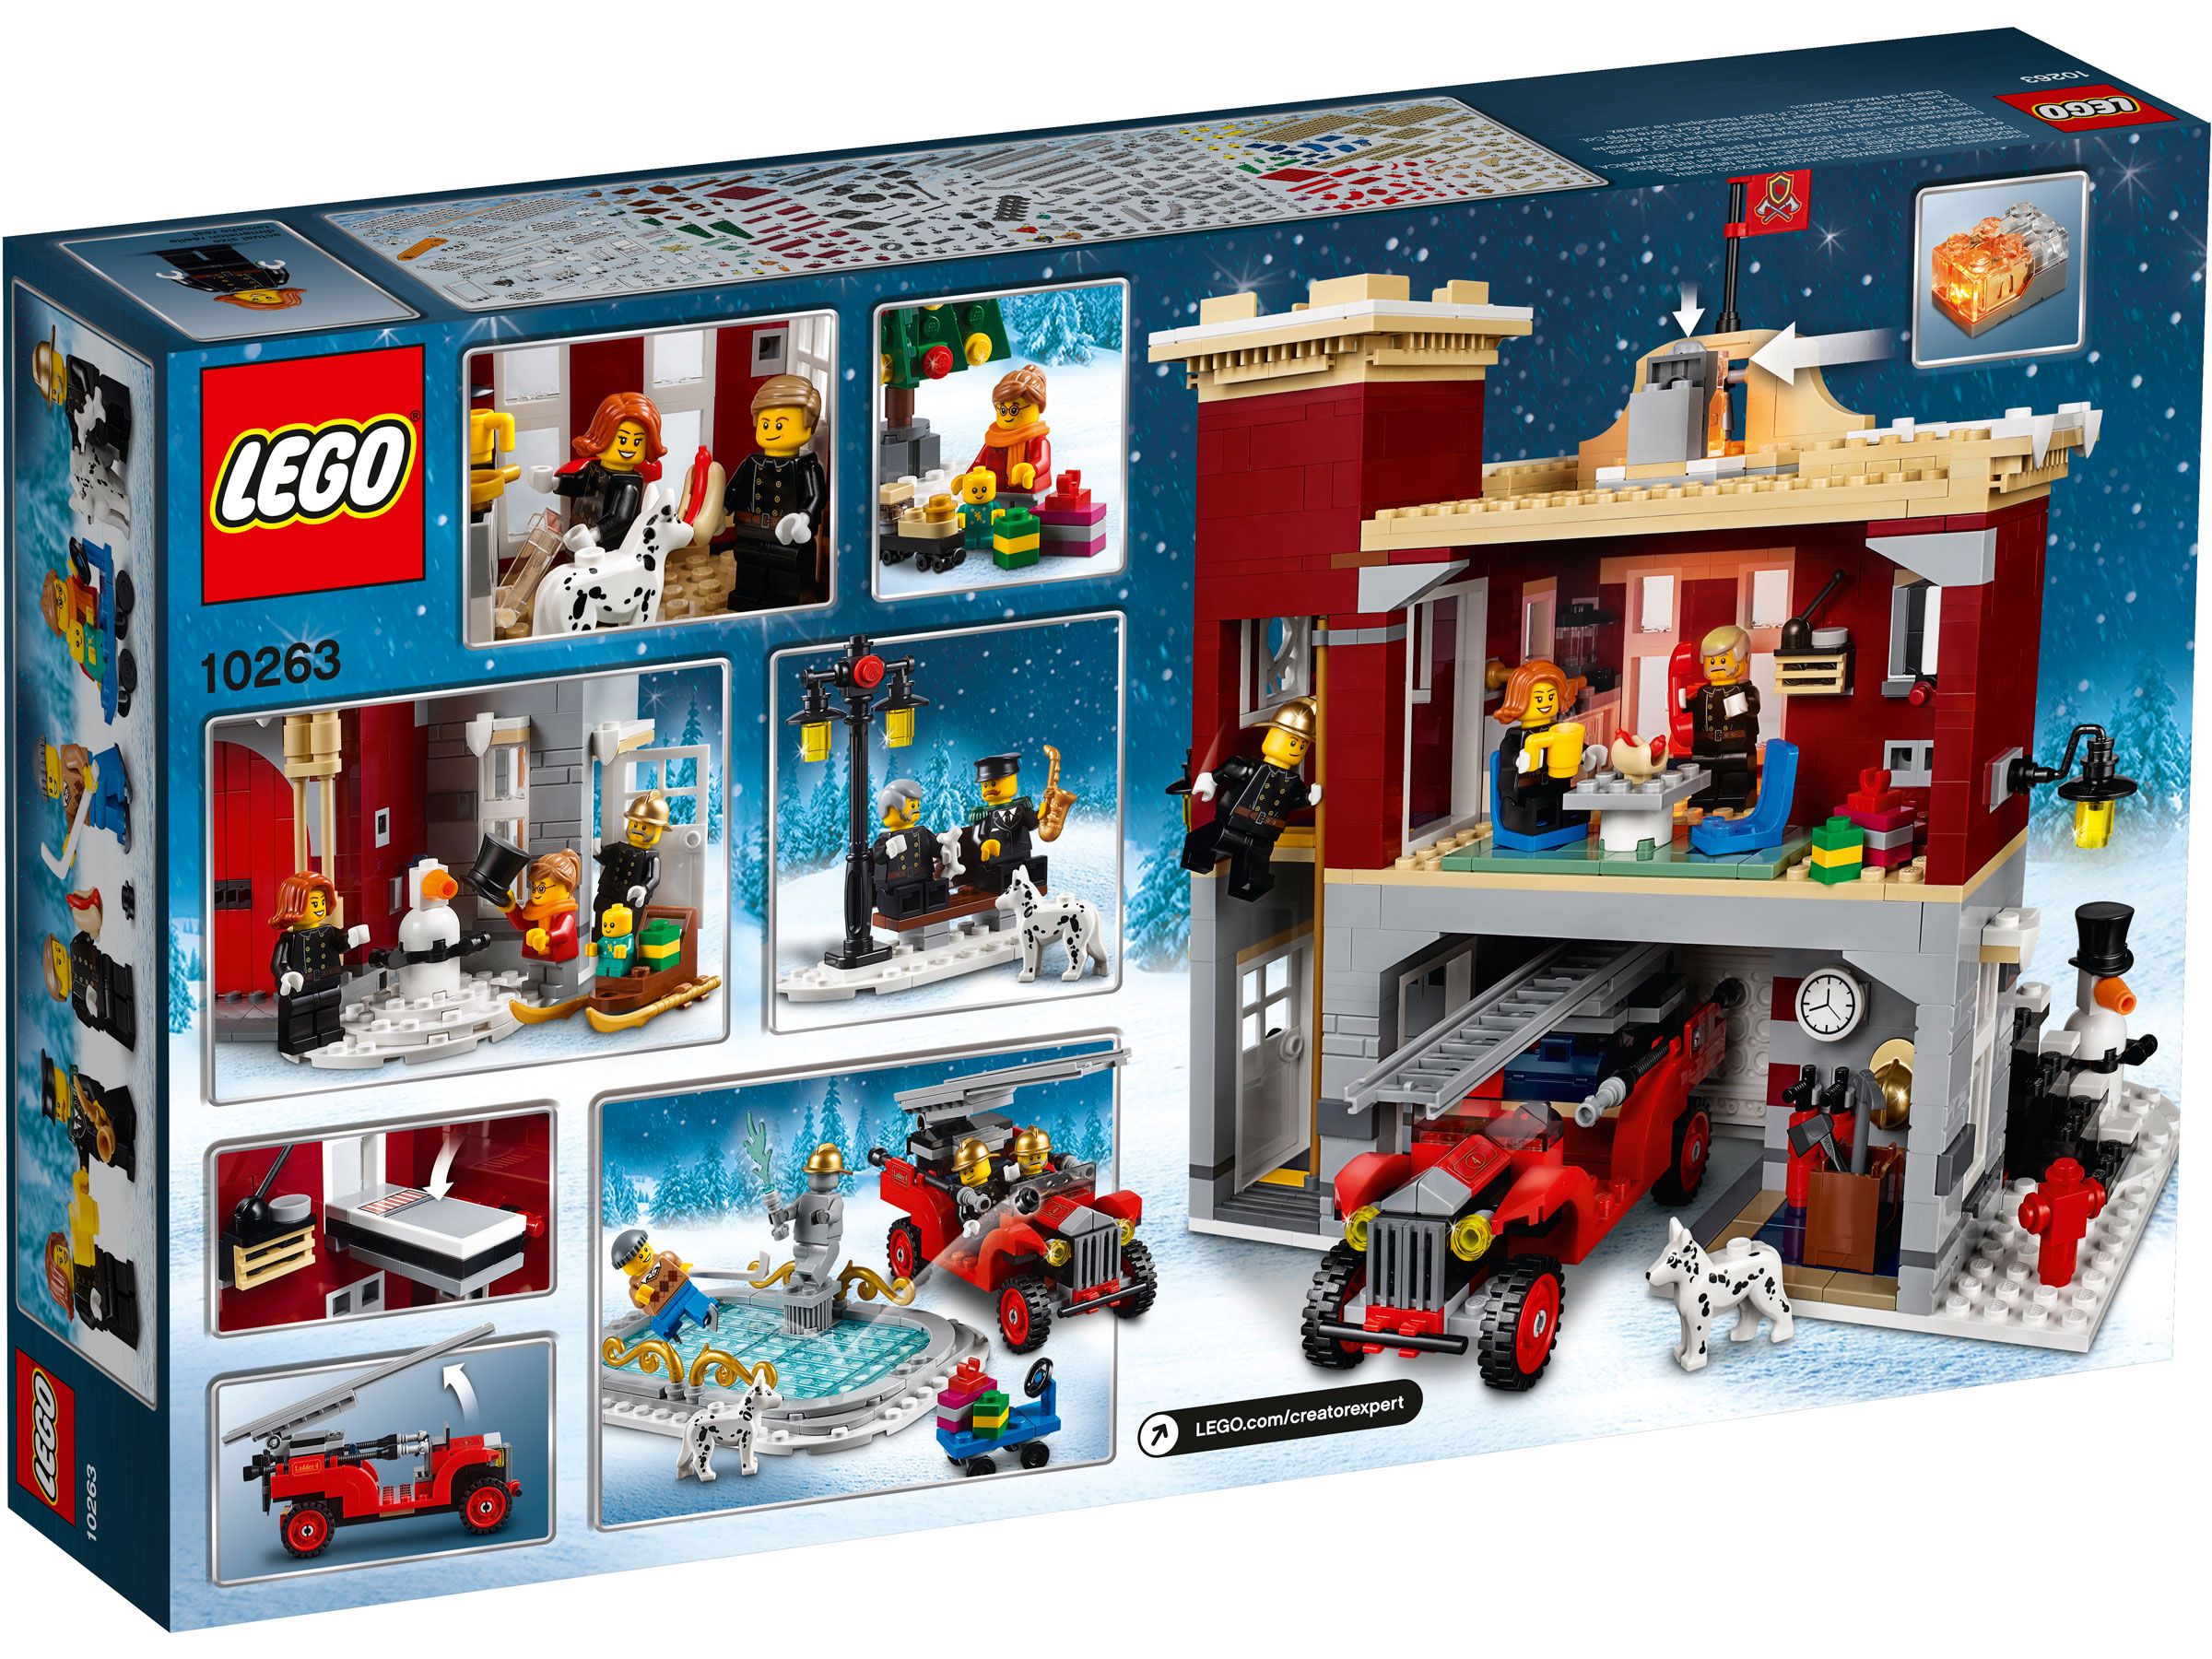 LEGO Advanced Models 10263 Winterliche Feuerwehrstation LEGO_10263_Box5_v39.jpg